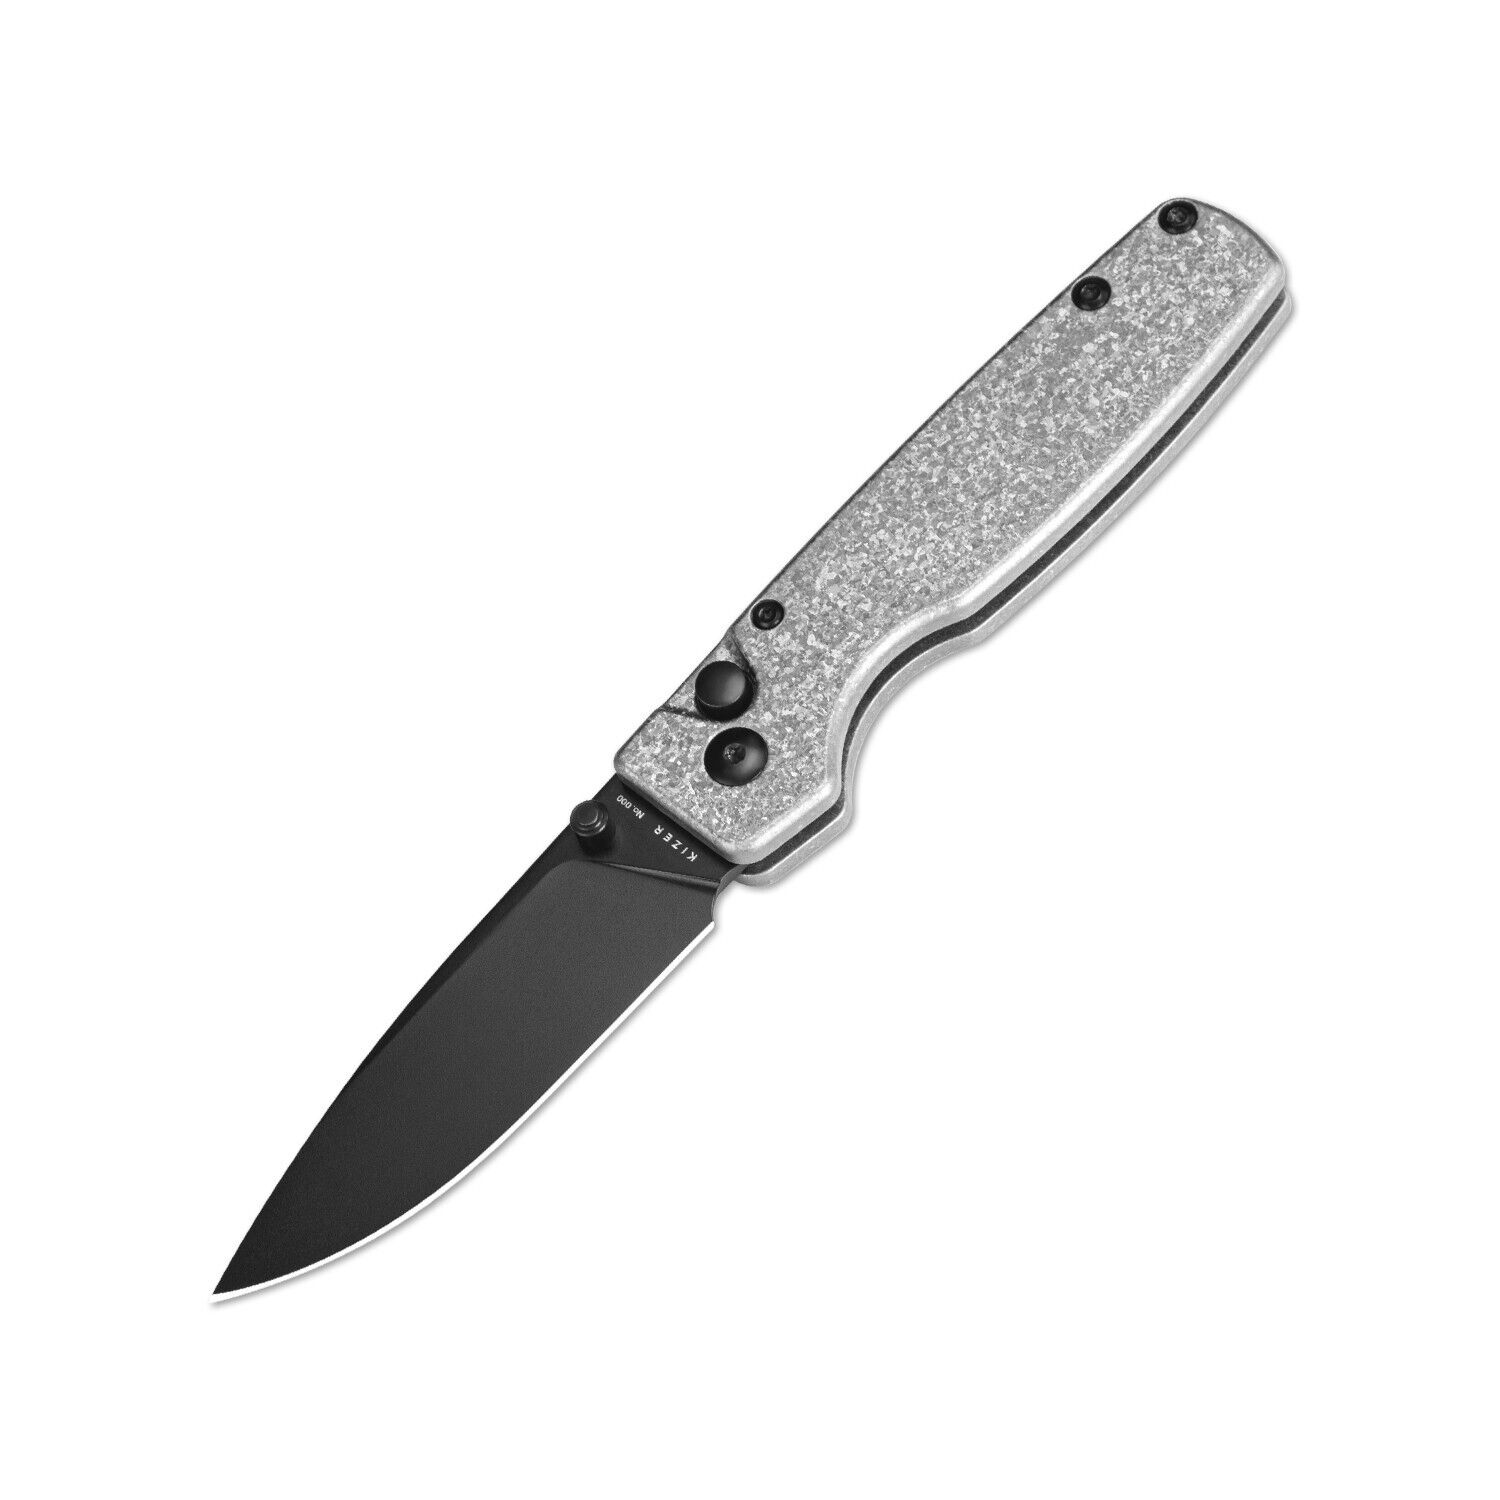 Kizer Original(XL) Folding Knife, S35VN Steel, Titanium Handle, Ki4605A2